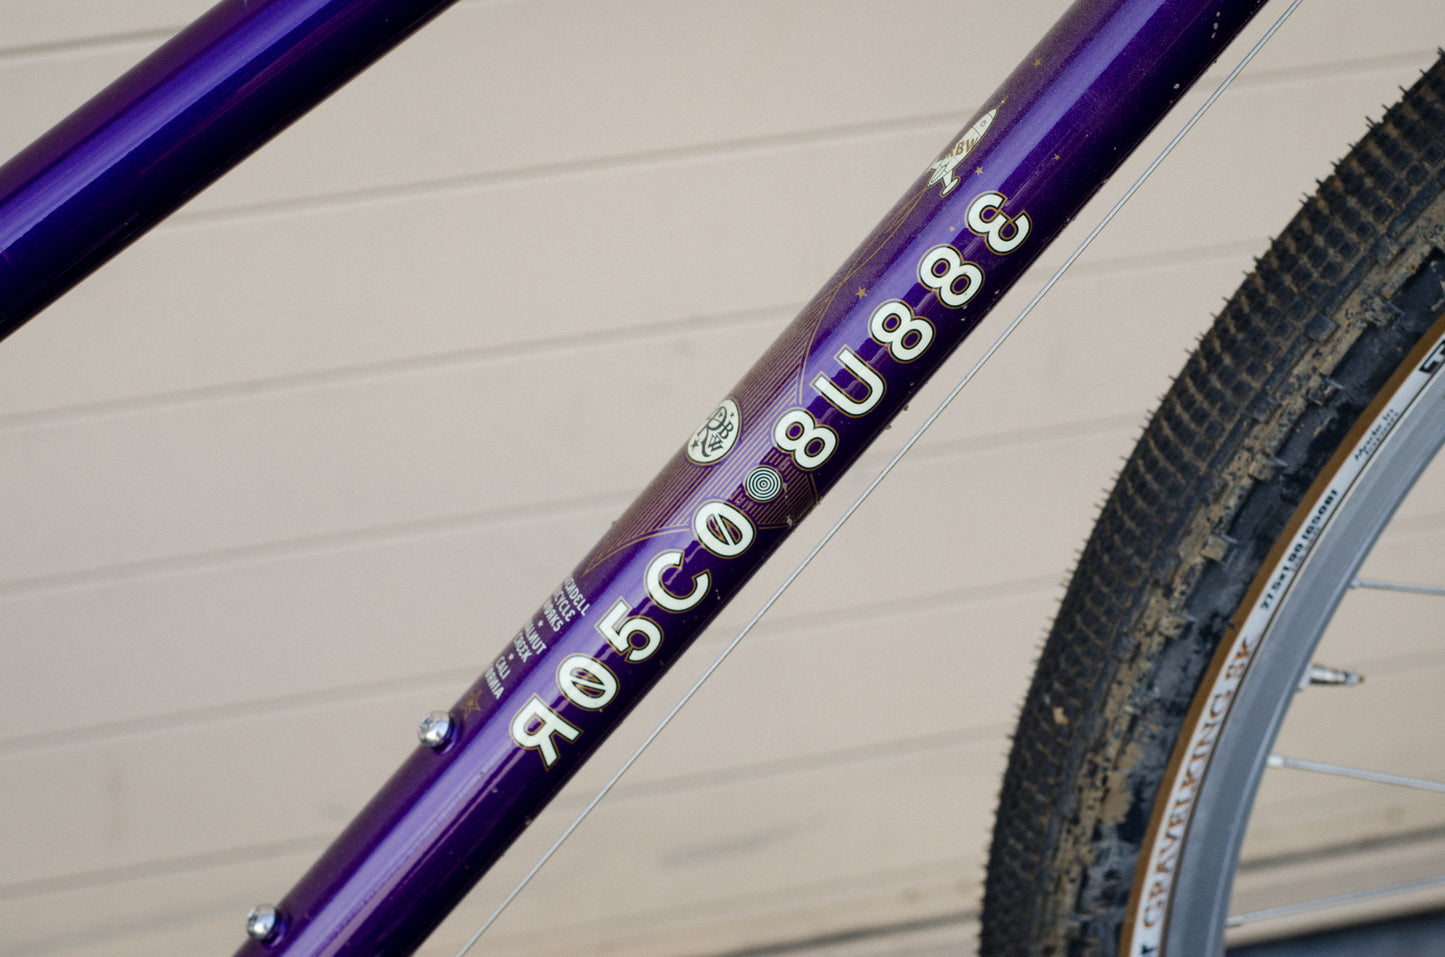 50cm Rosco Platy demo bike